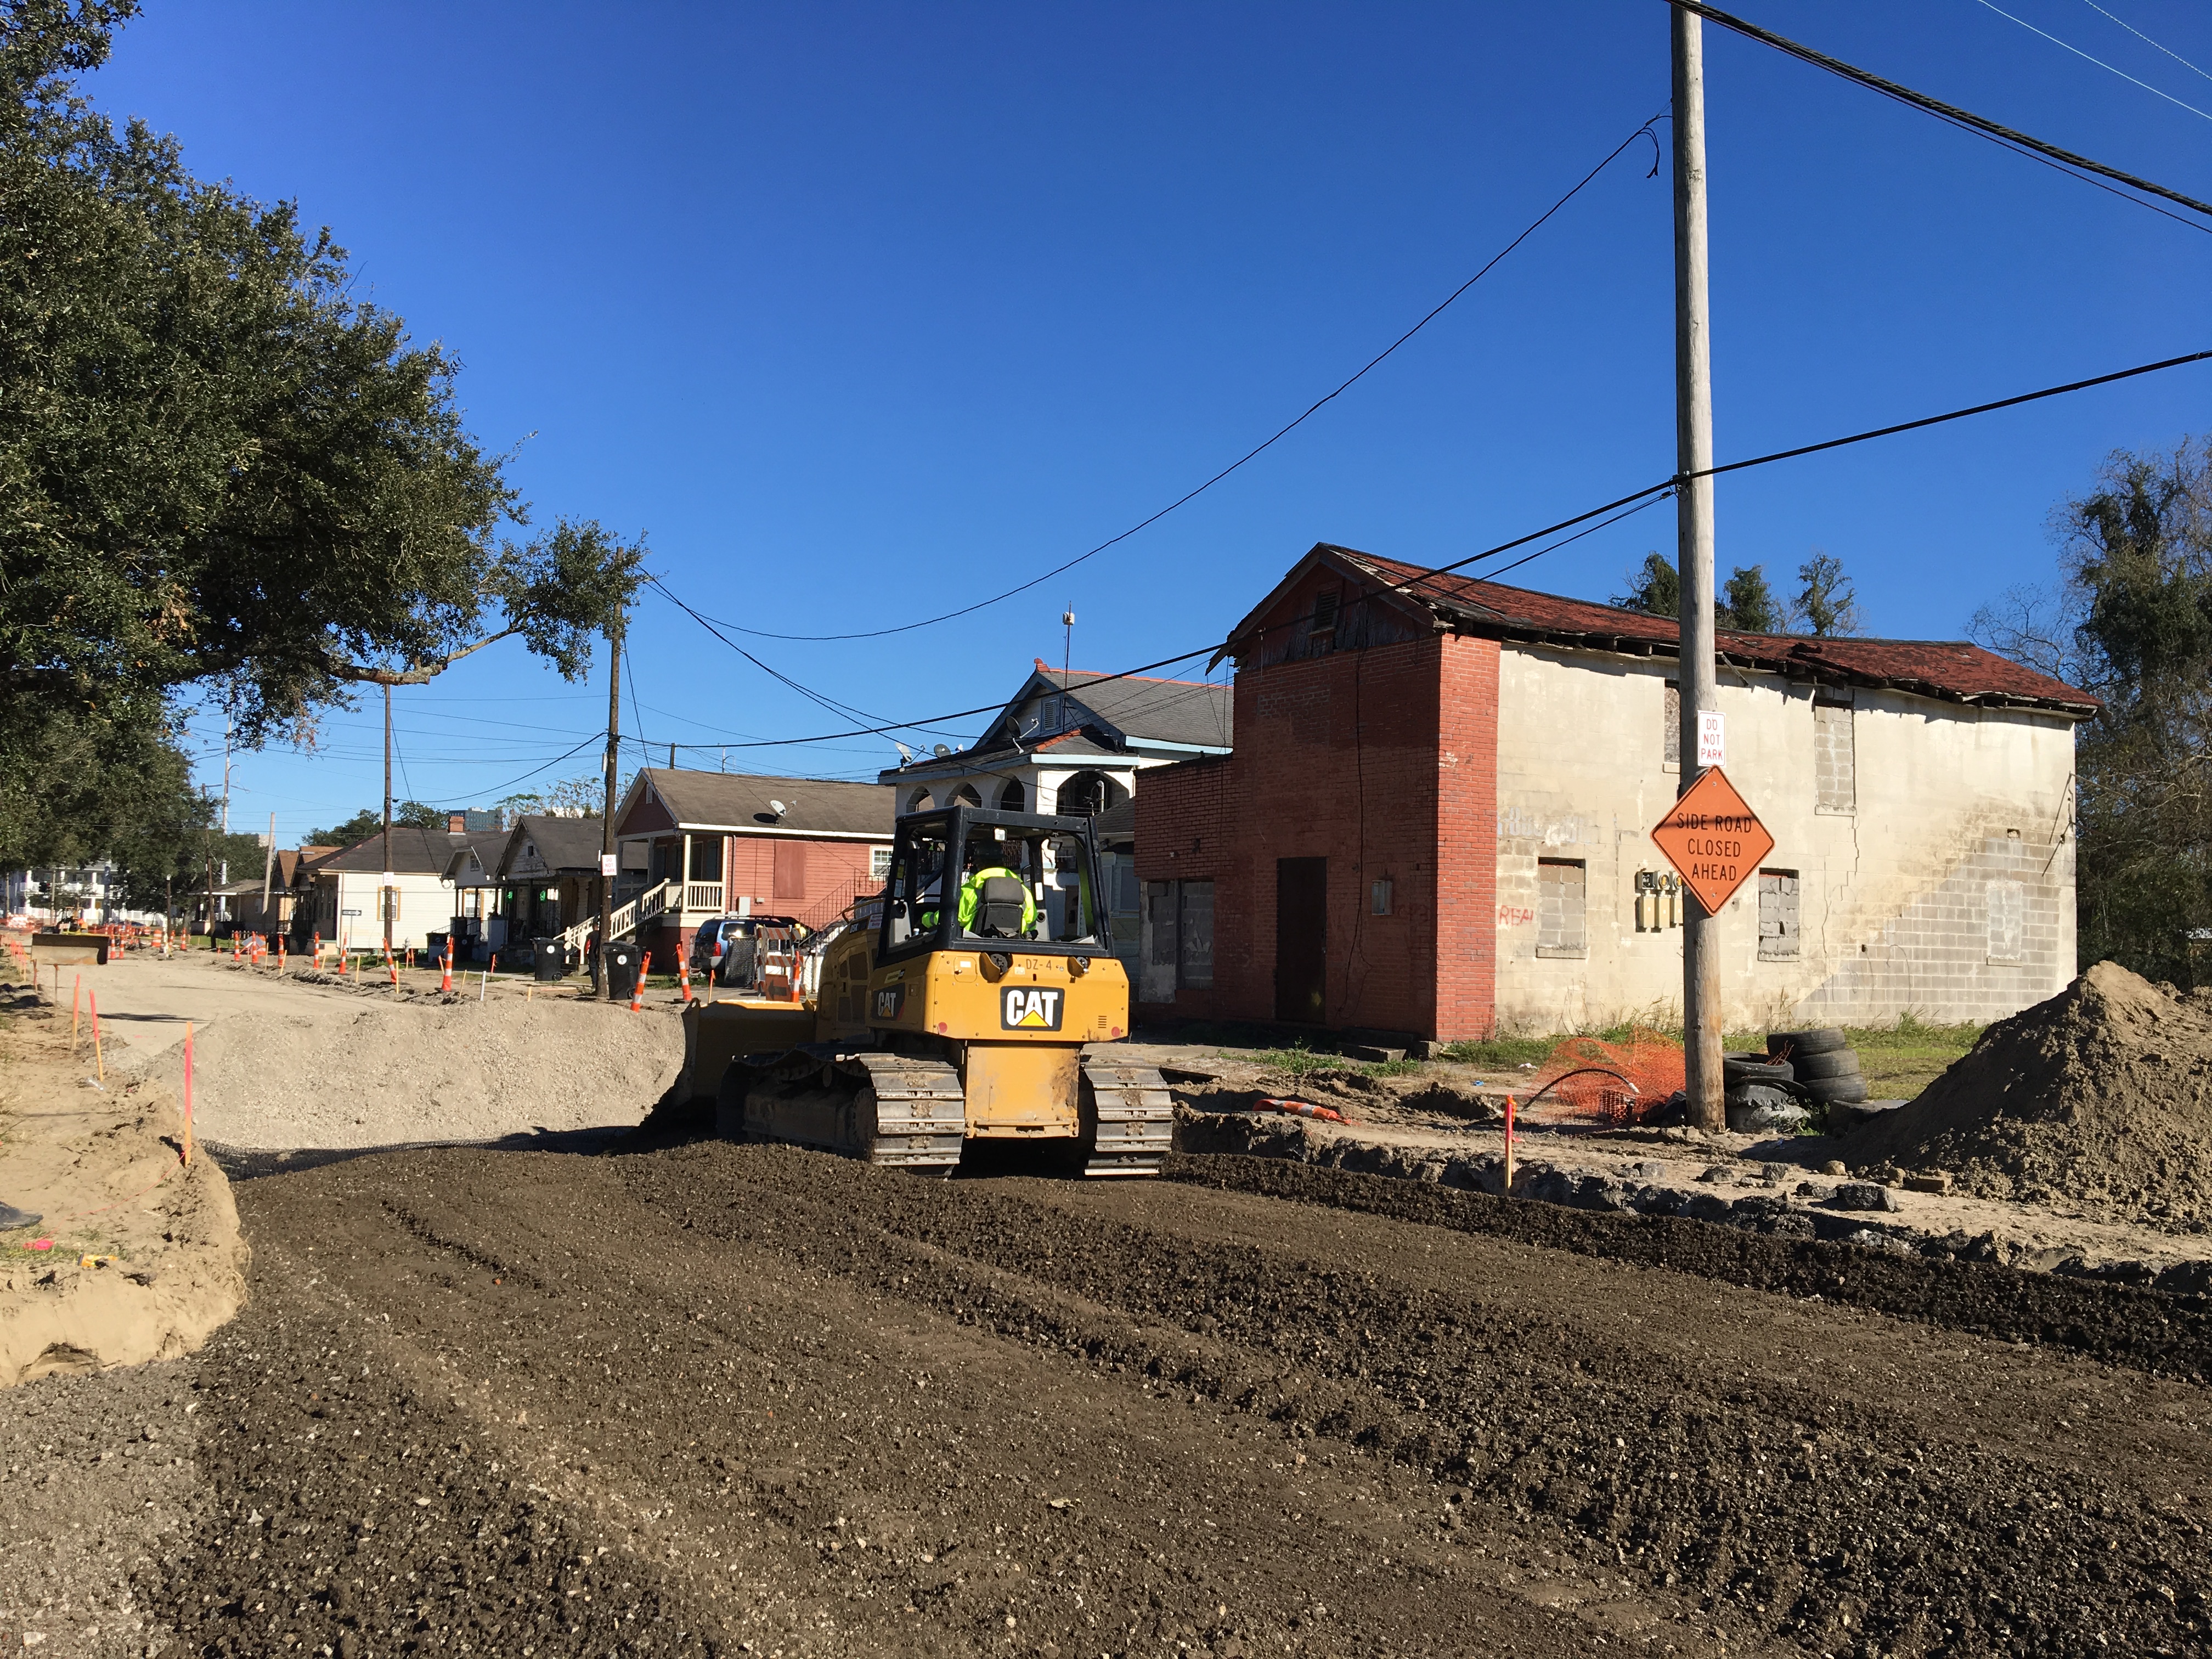 COMMAND CONSTRUCTION INDUSTRIES, LLC CREWS 88 PERCENT COMPLETE ON S. GALVEZ STREET PROJECT, CONSTRUCION SCHEDULED TO LAST UNTIL MARDI GRAS